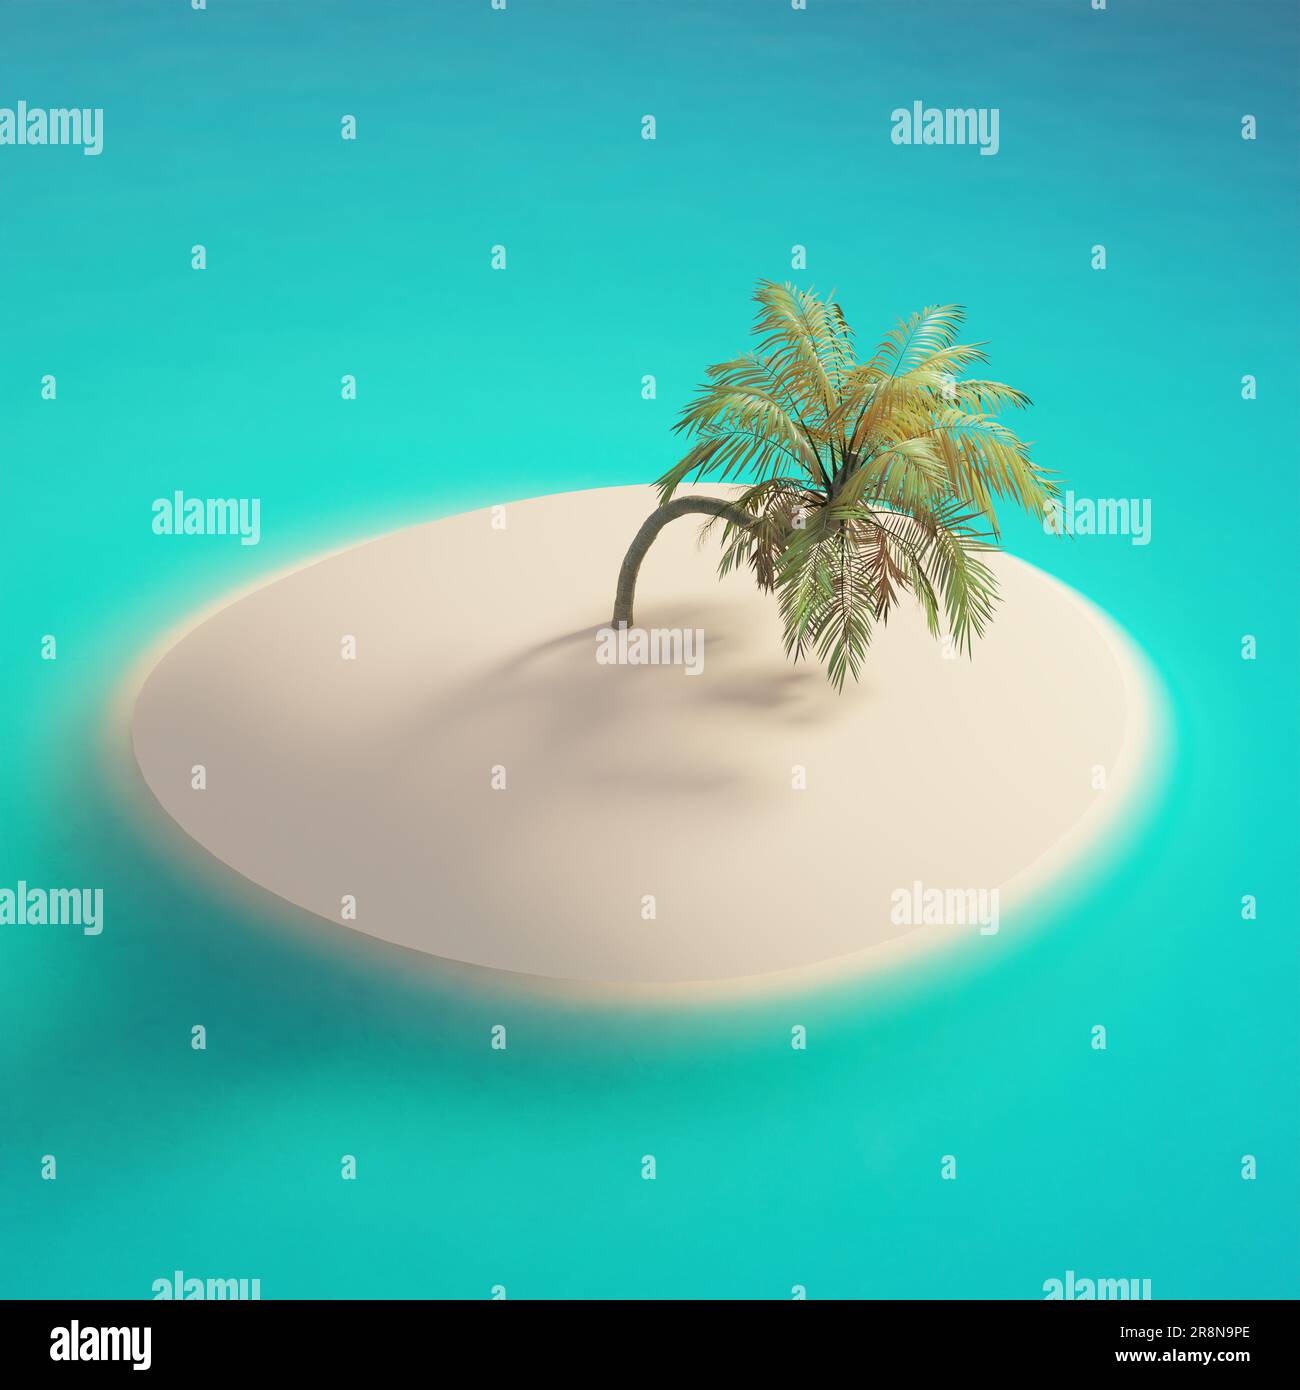 Leere tropische Insel mit Palmen im türkisfarbenen Ozean, Urlaubs- oder Reisekonzept, 3D-Rendering Stockfoto